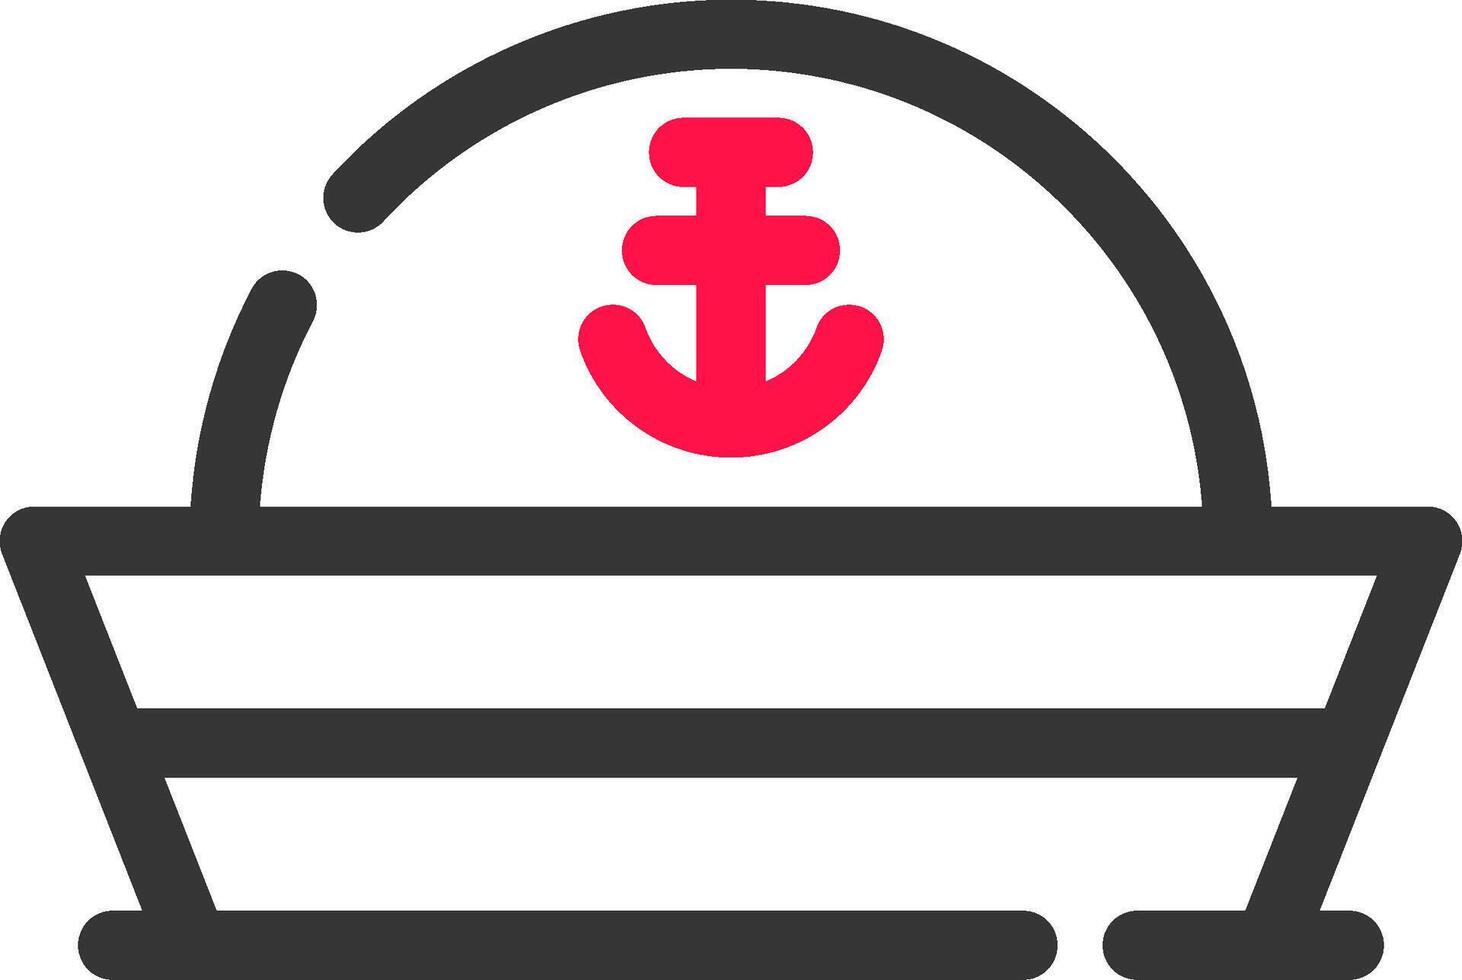 Sailor Hat Creative Icon Design vector